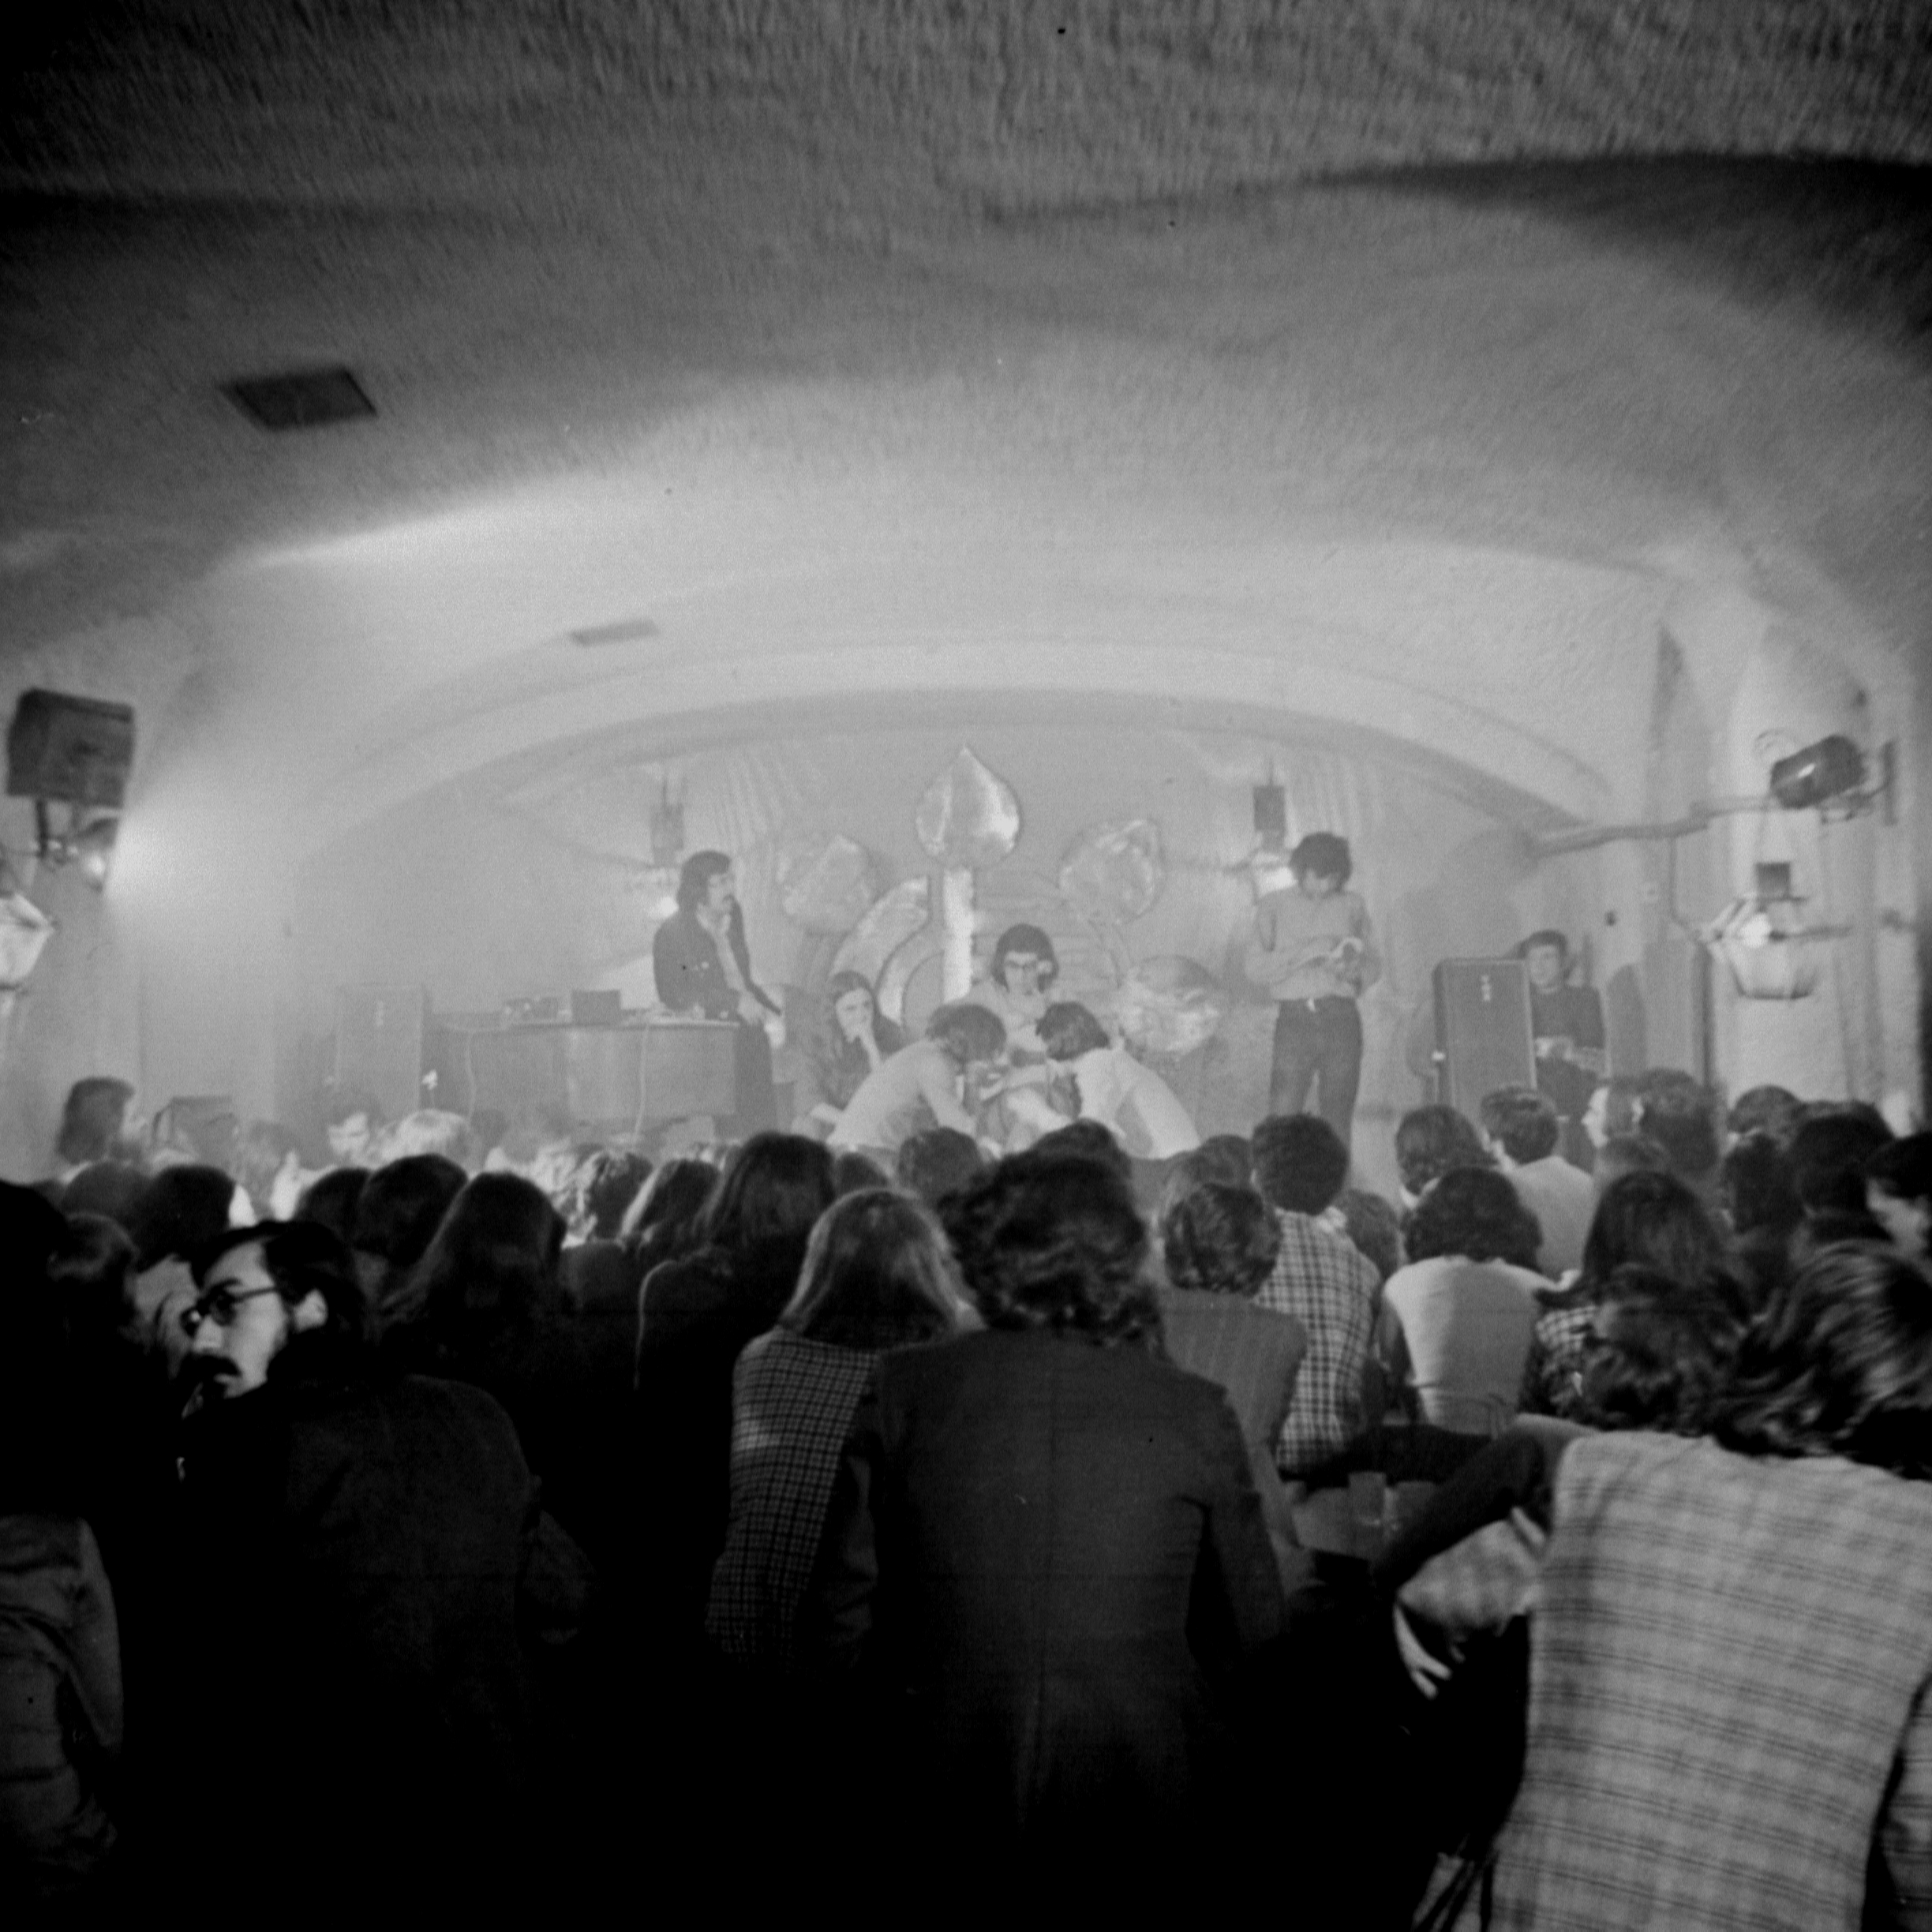 Concert in Club A, 1974